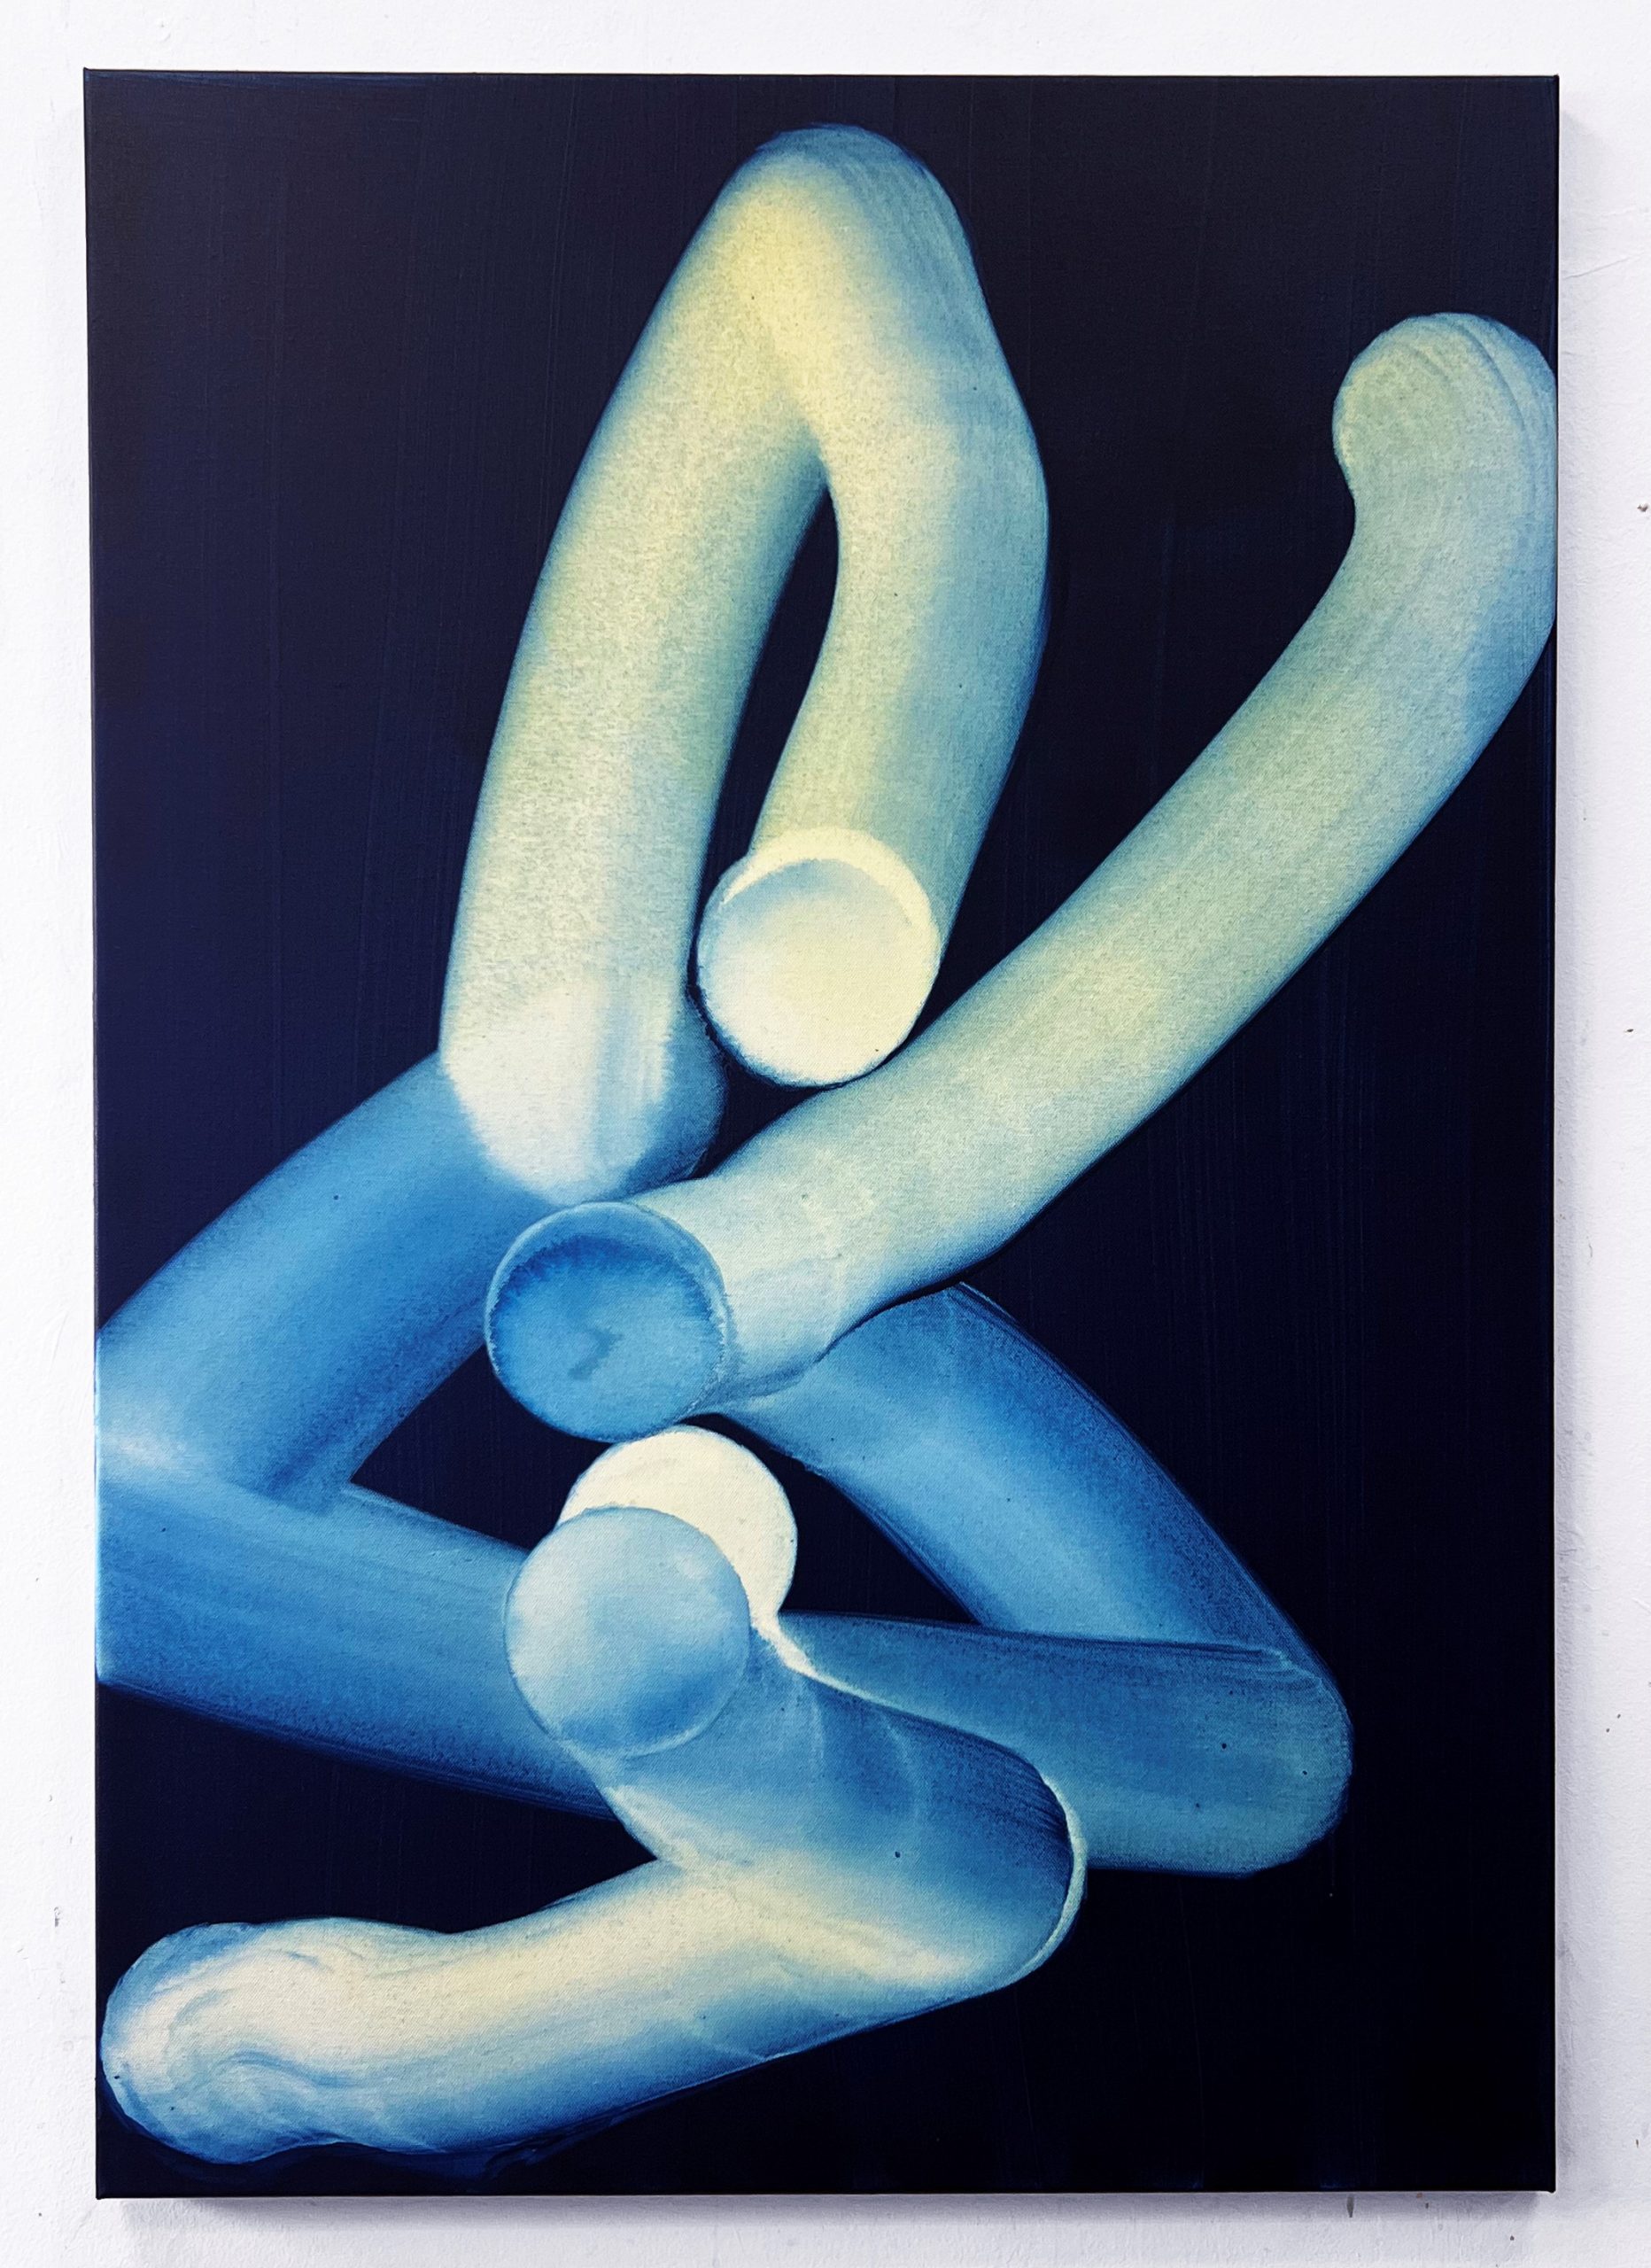 Stanislav Ondruš “In the middle is it” 2022 100 cm x 70 cm acrylic on canvas